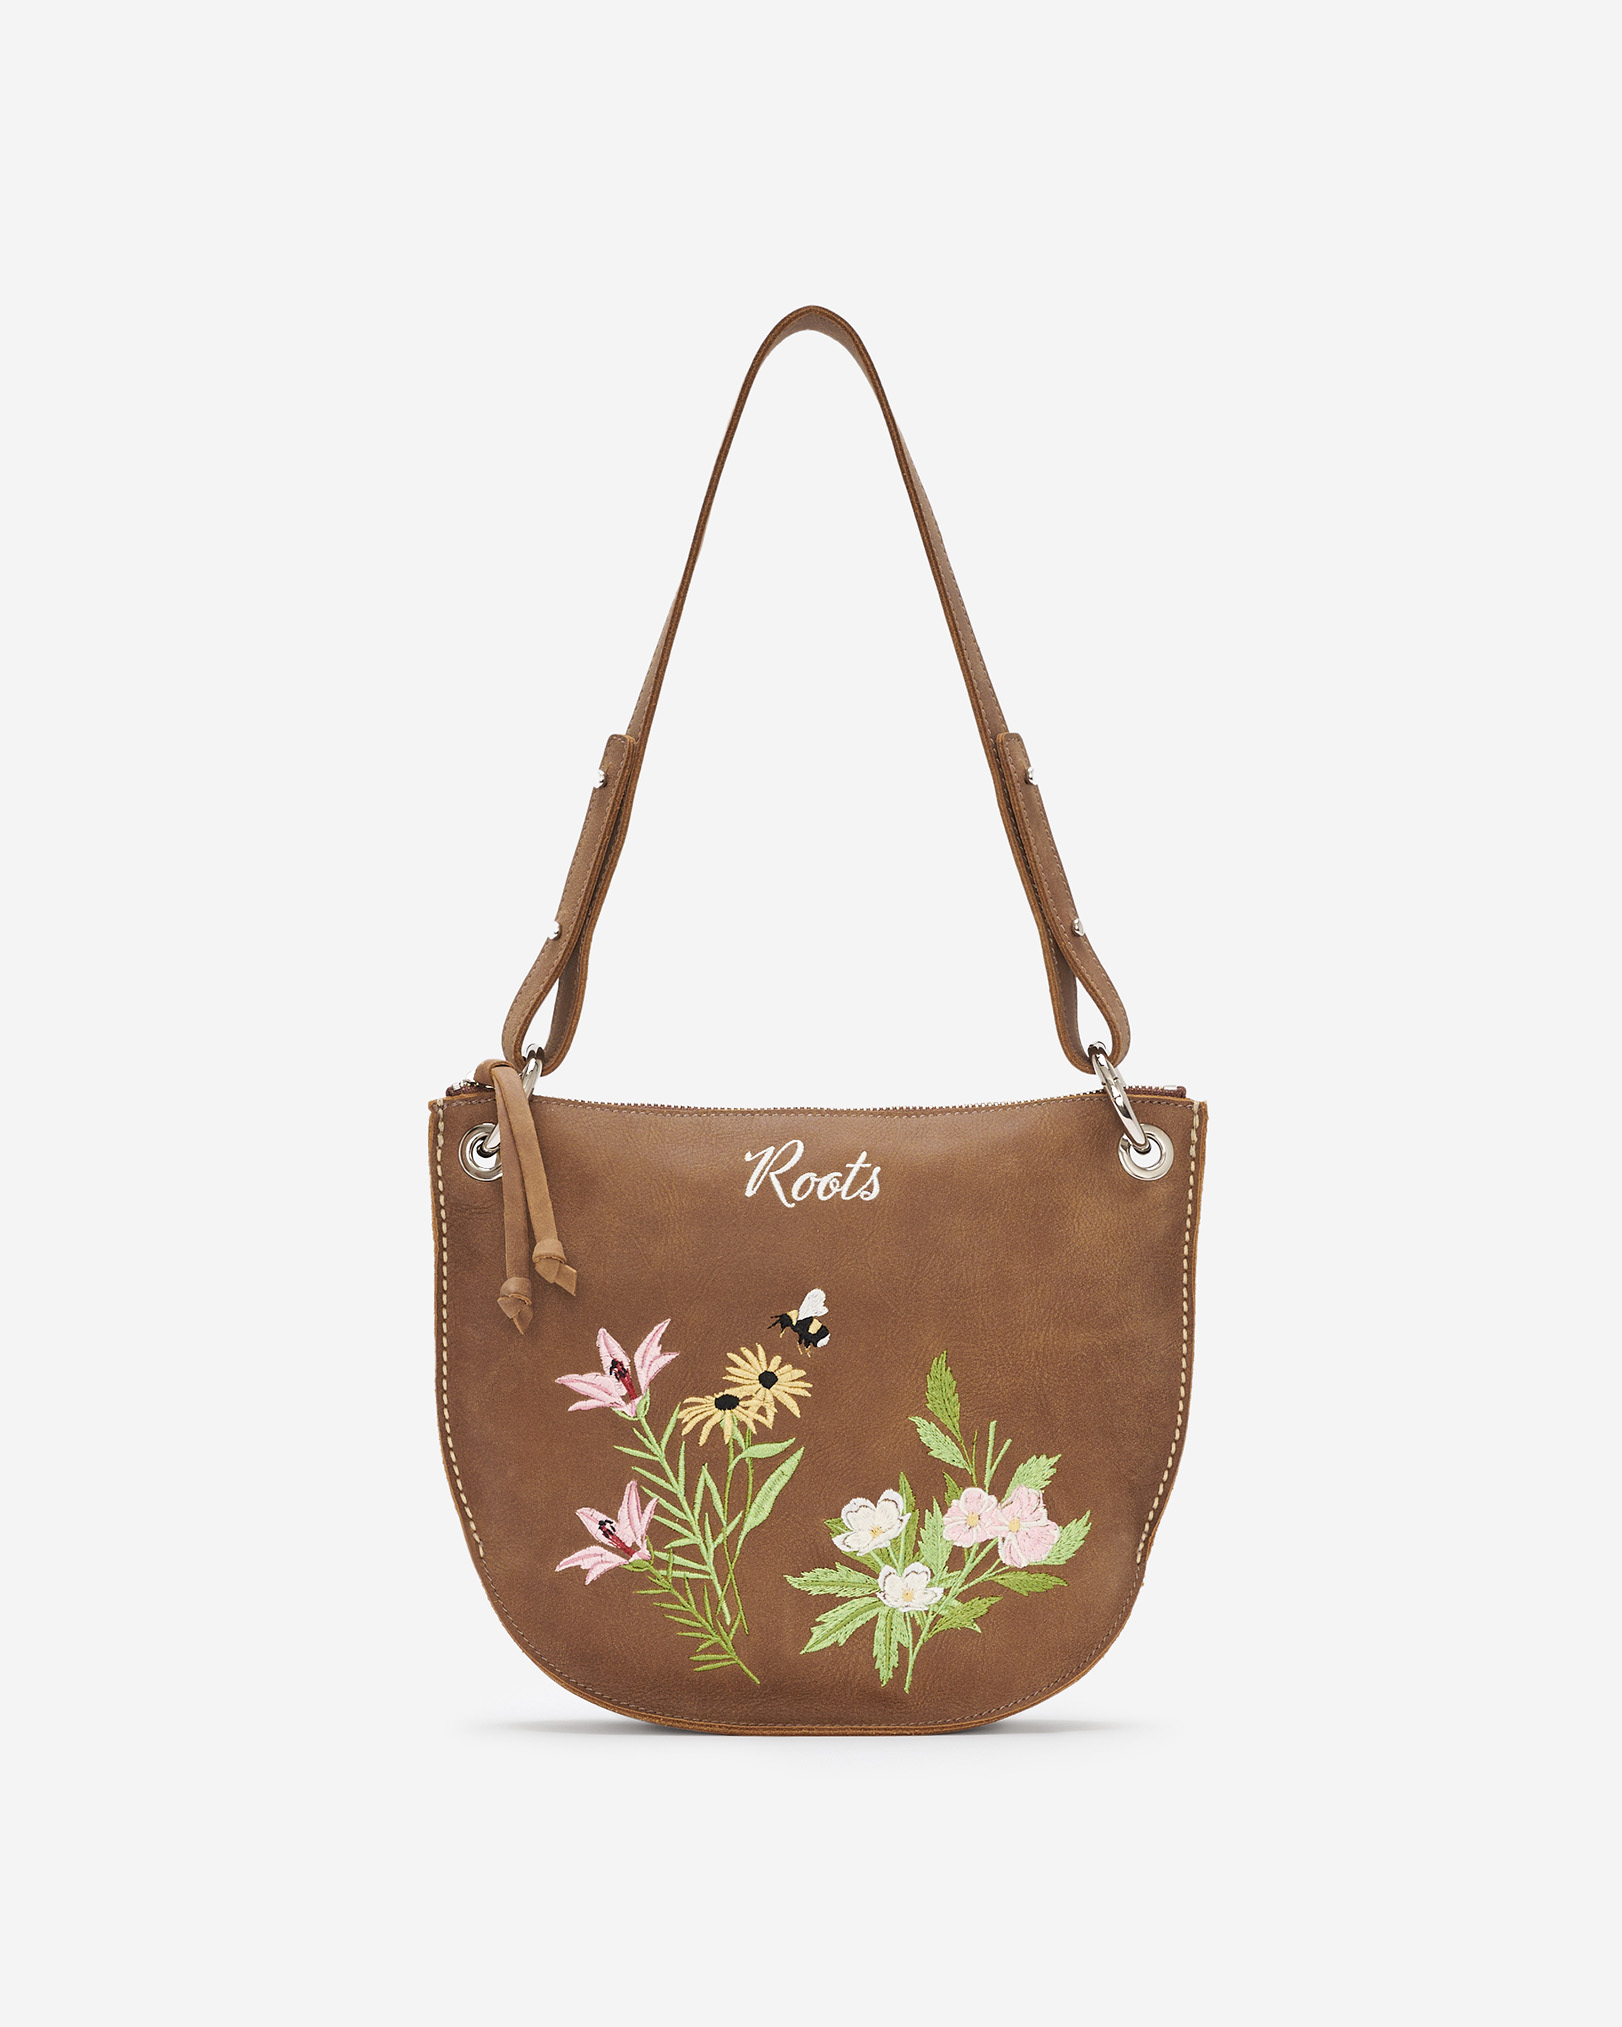 Roots Edie Floral Shoulder Handbag Tribe in Natural